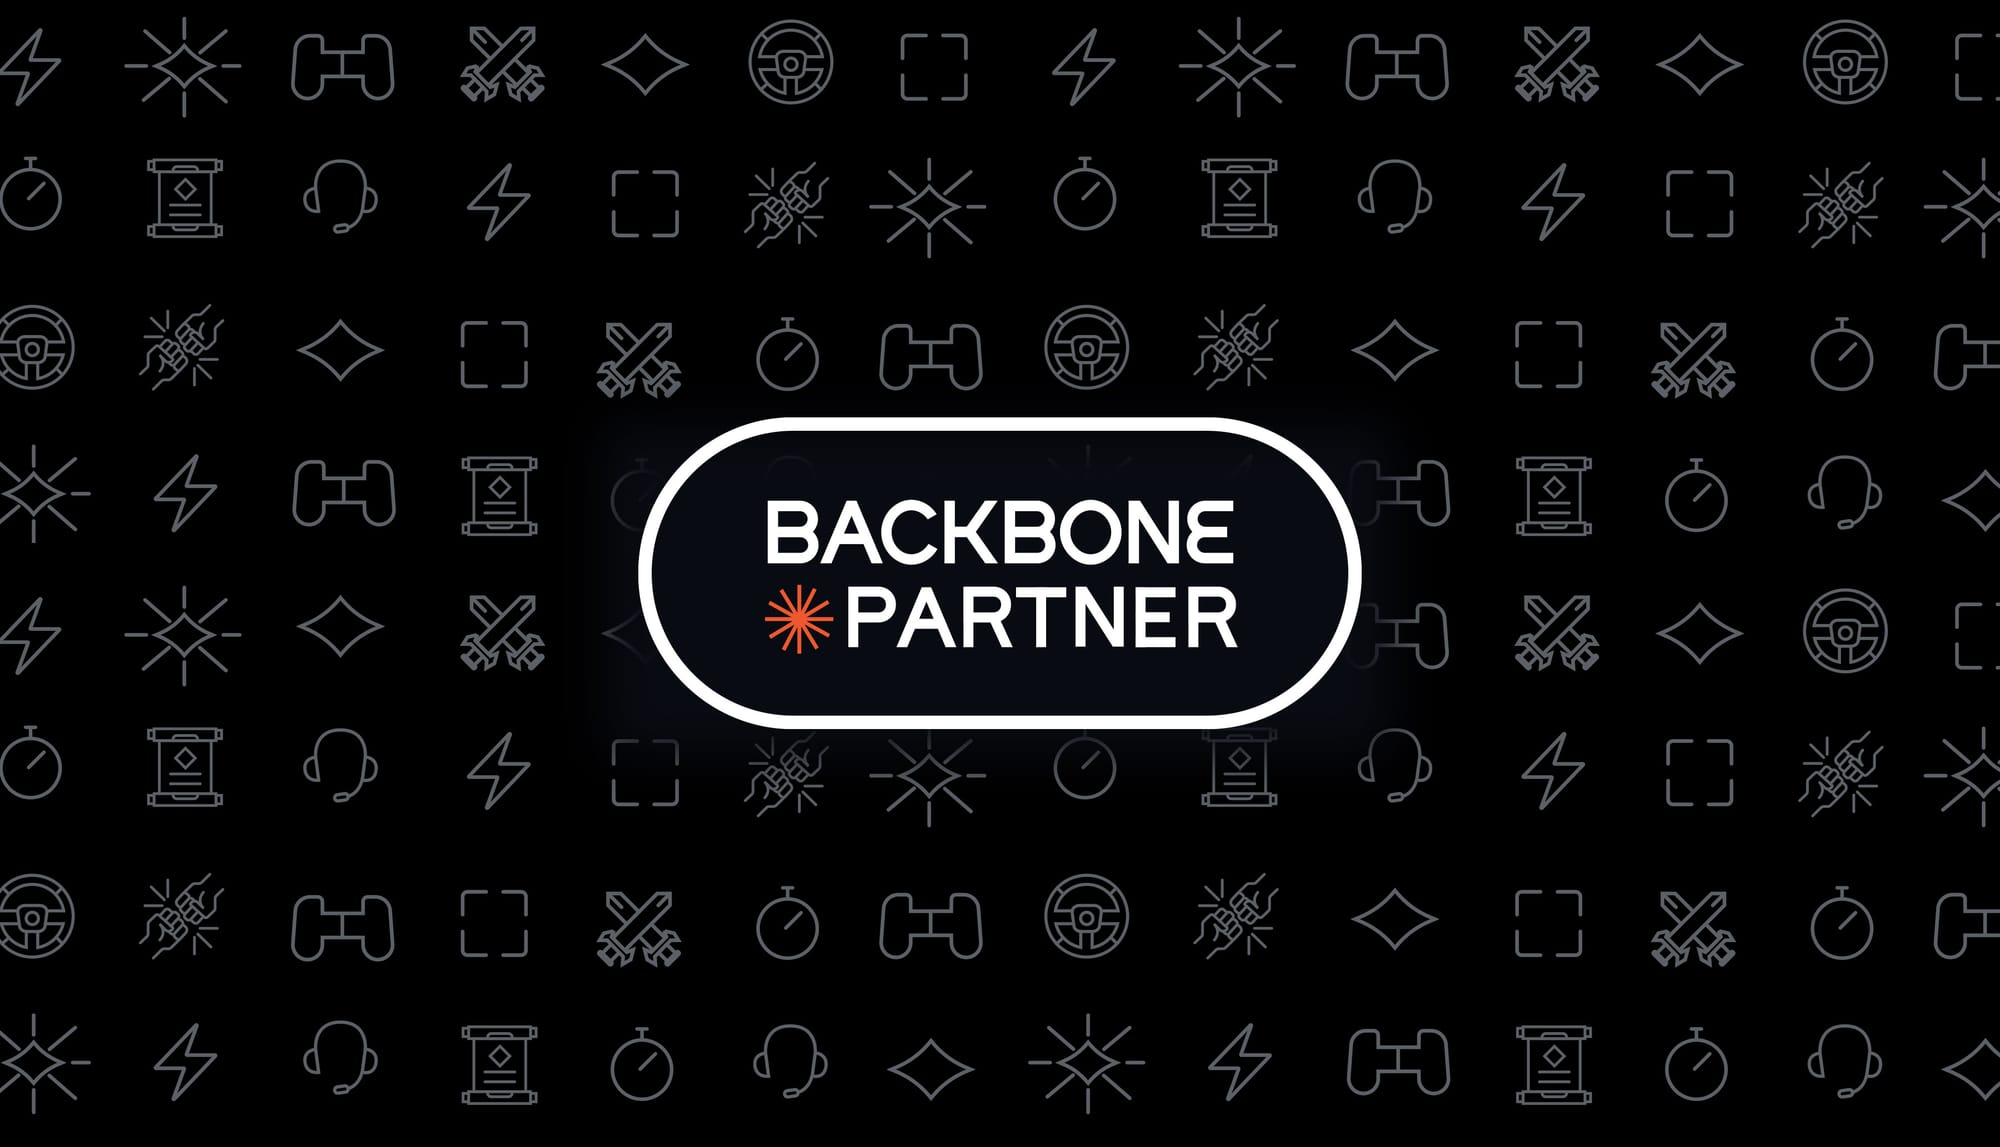 Introducing the Backbone Partner Program